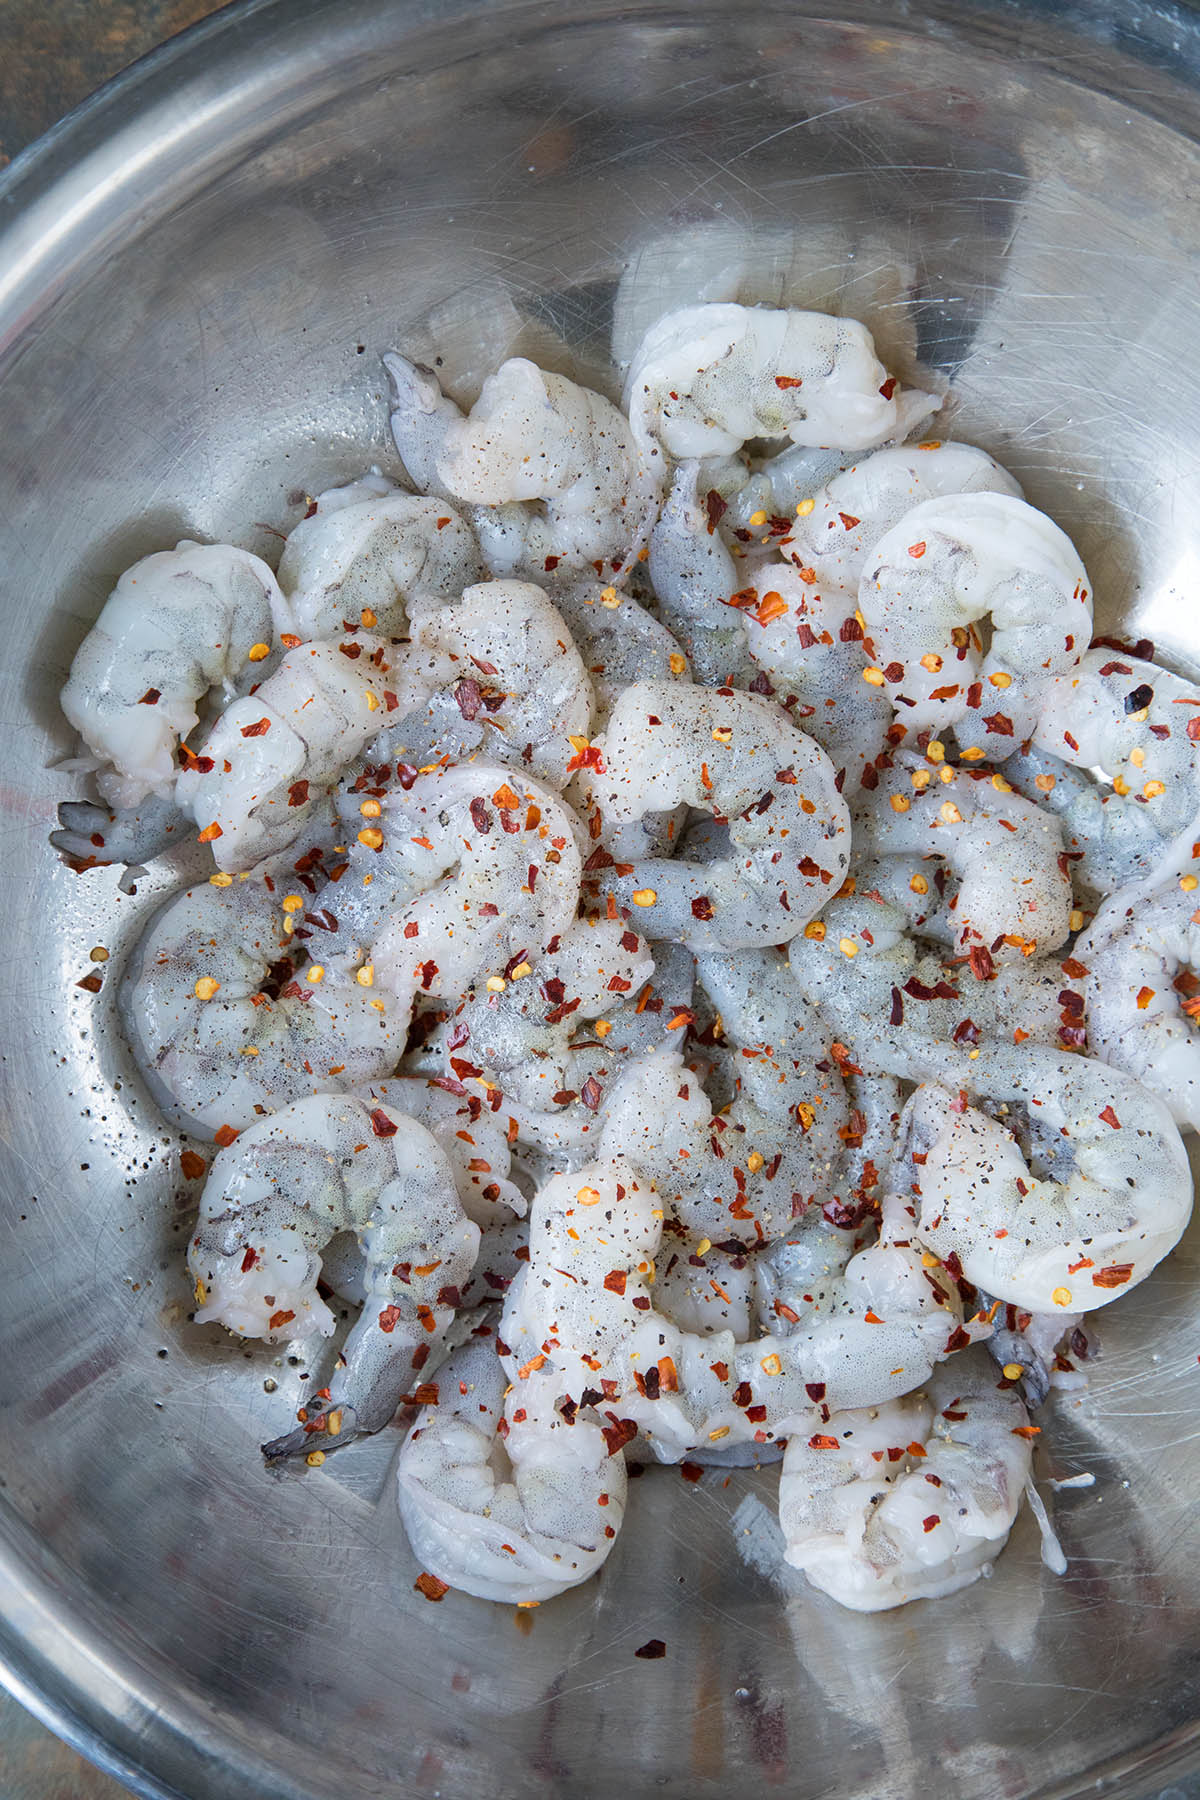 Season the shrimp with chili flakes and seasonings